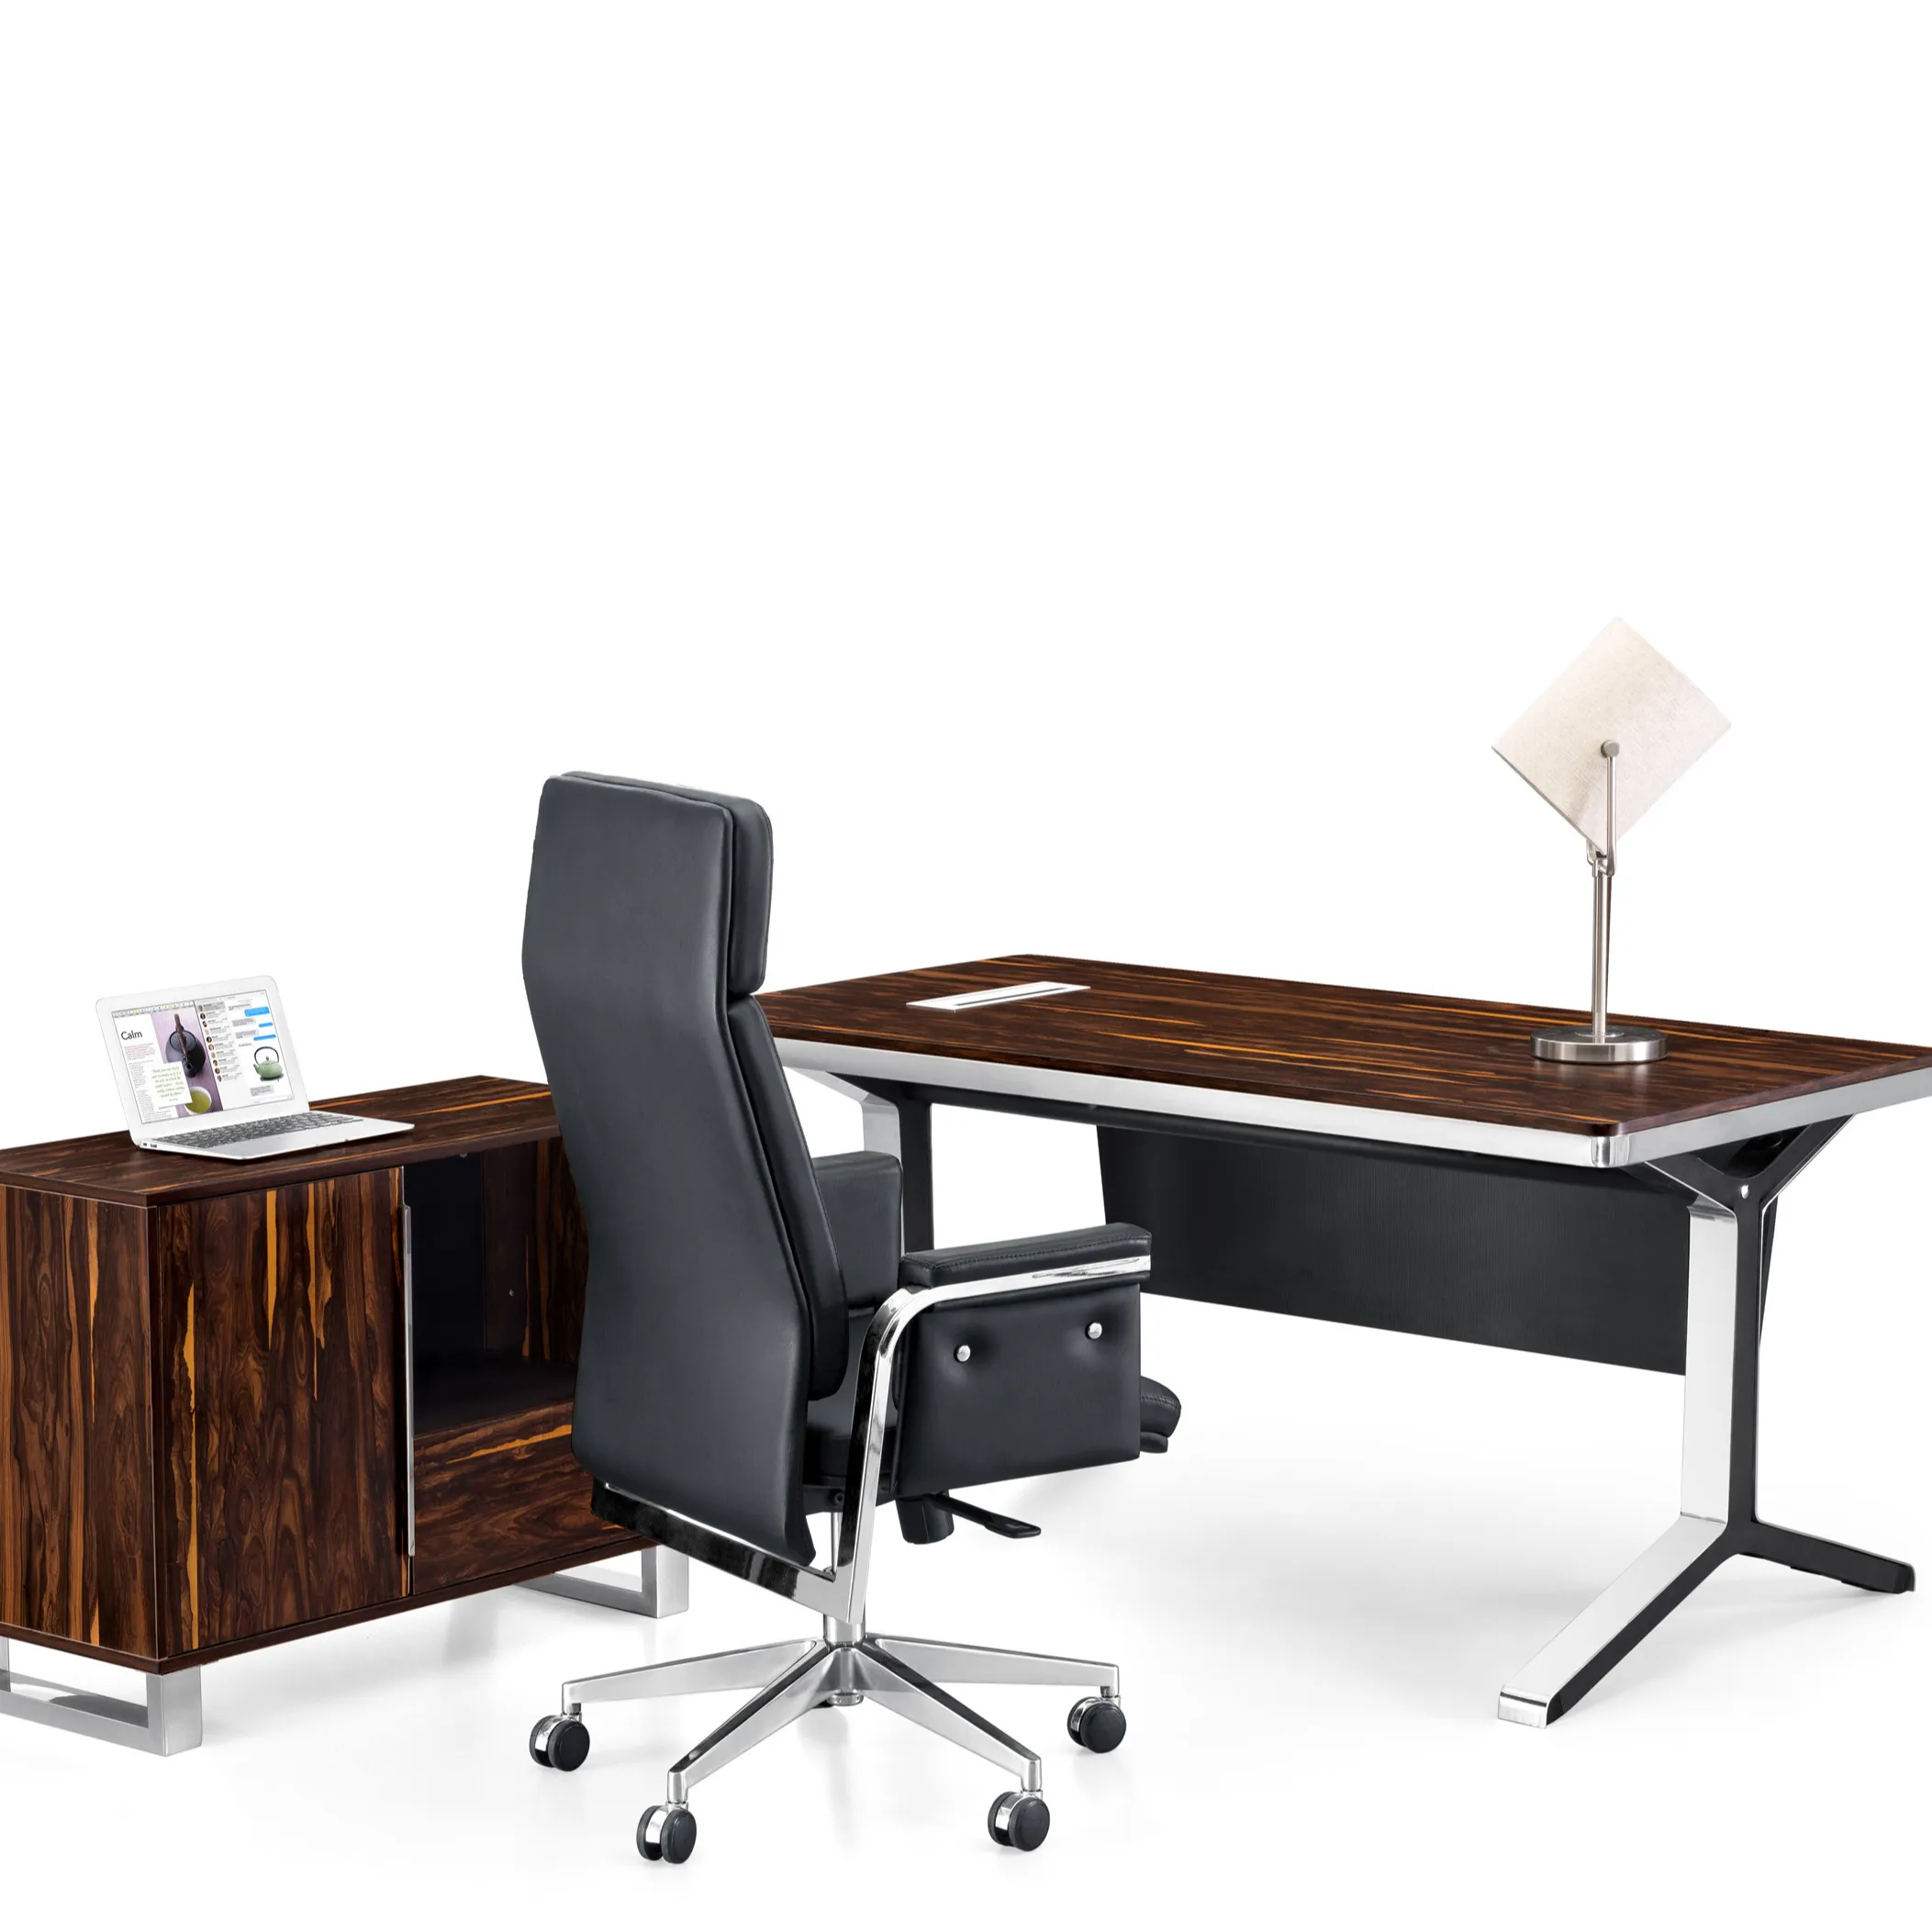 Hohe reichweite Moderne Design Holz Büro Möbel executive tabelle